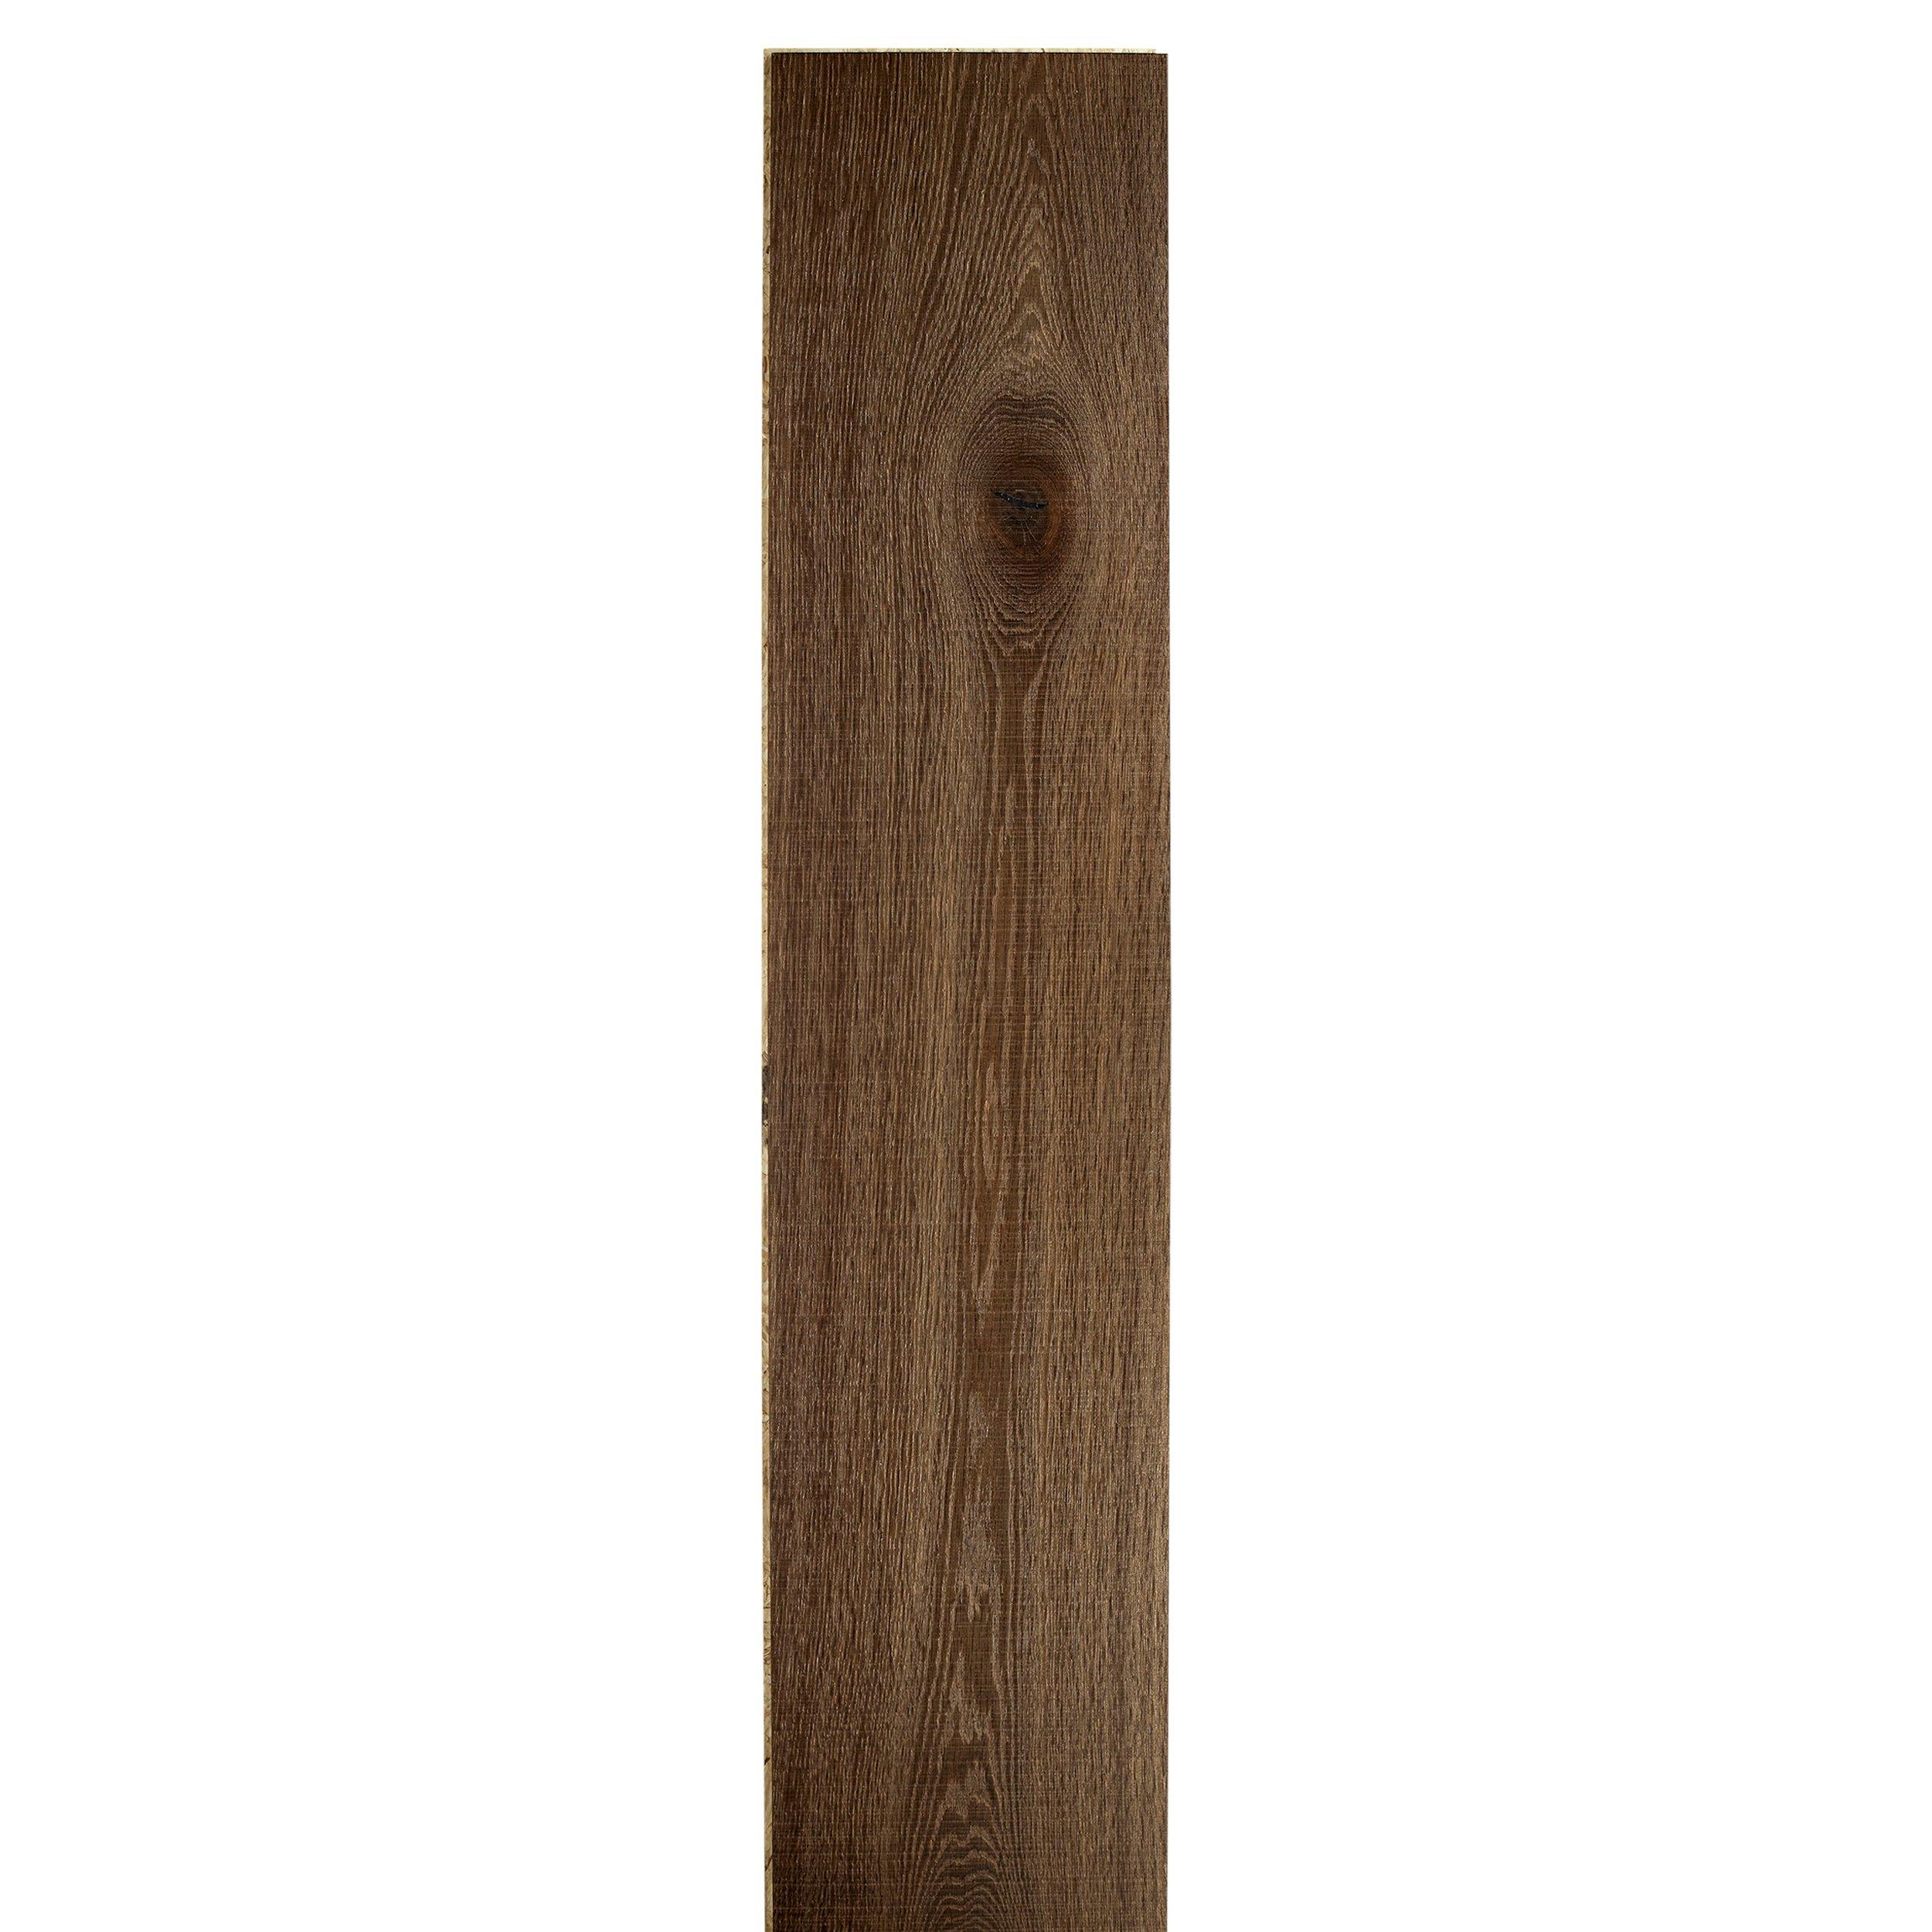 Moreland White Oak Distressed Engineered Hardwood